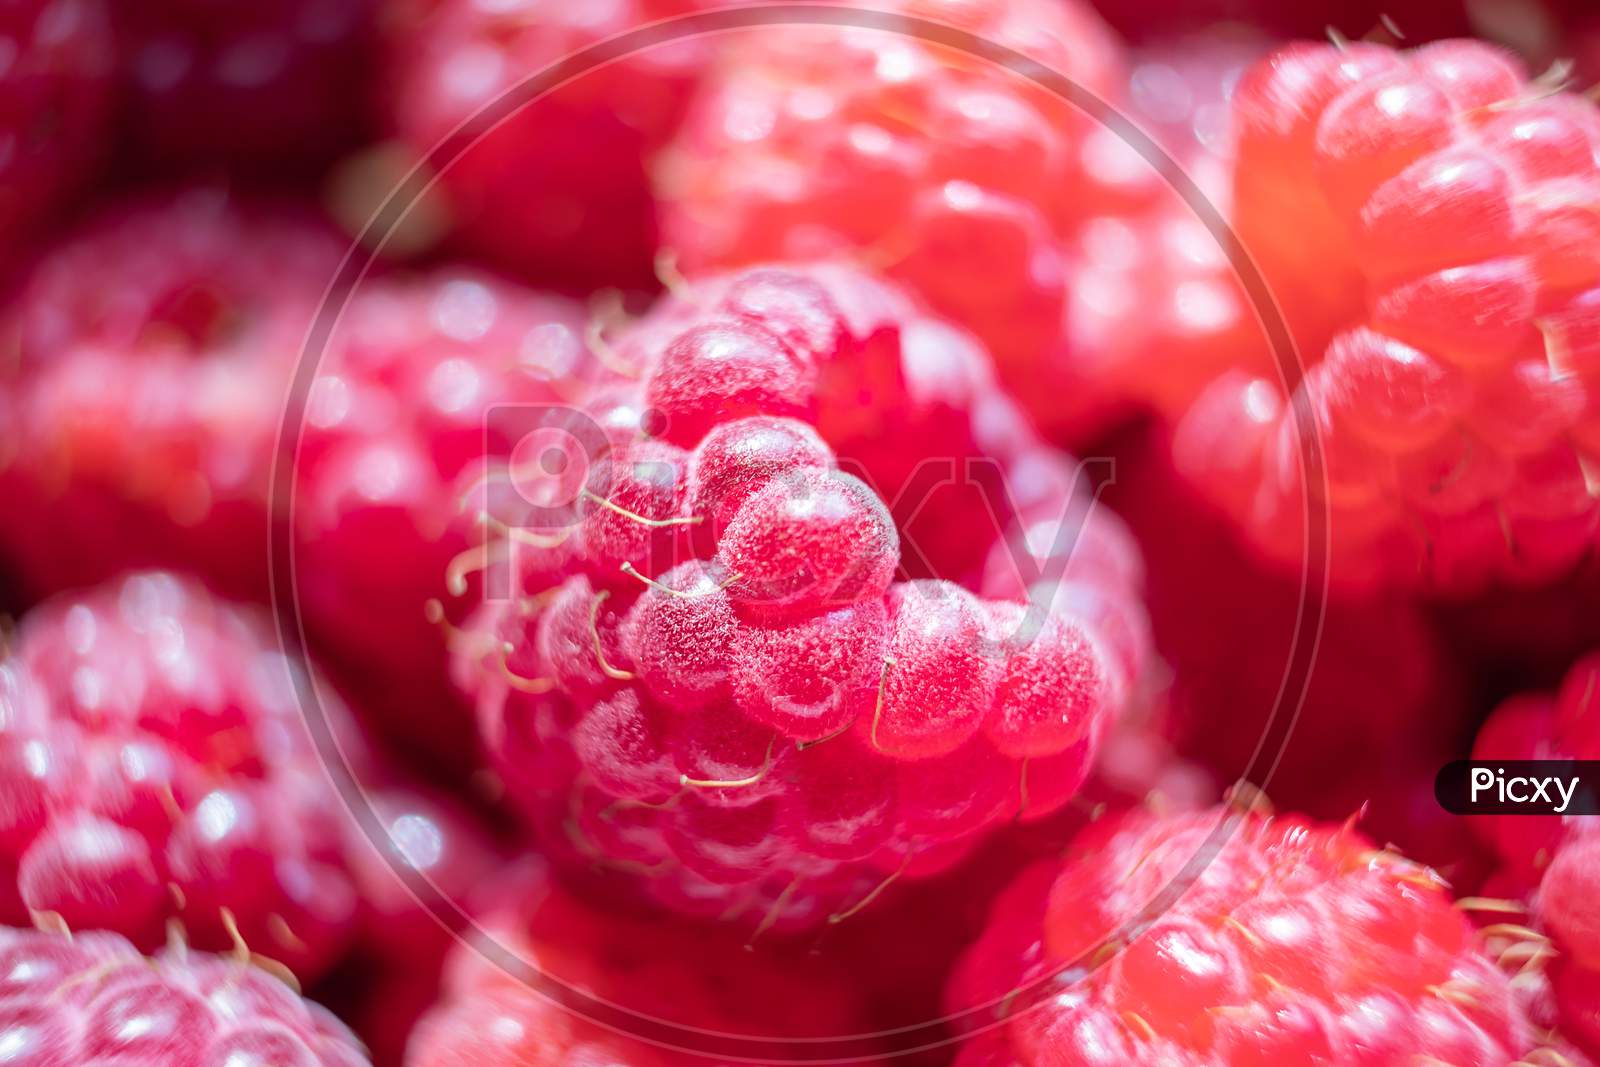 Raspberries Close-Up. Fresh Harvest Of Berries, Macro Photo. Concept Of Organic Healthy Wholesome Vitamin Food.